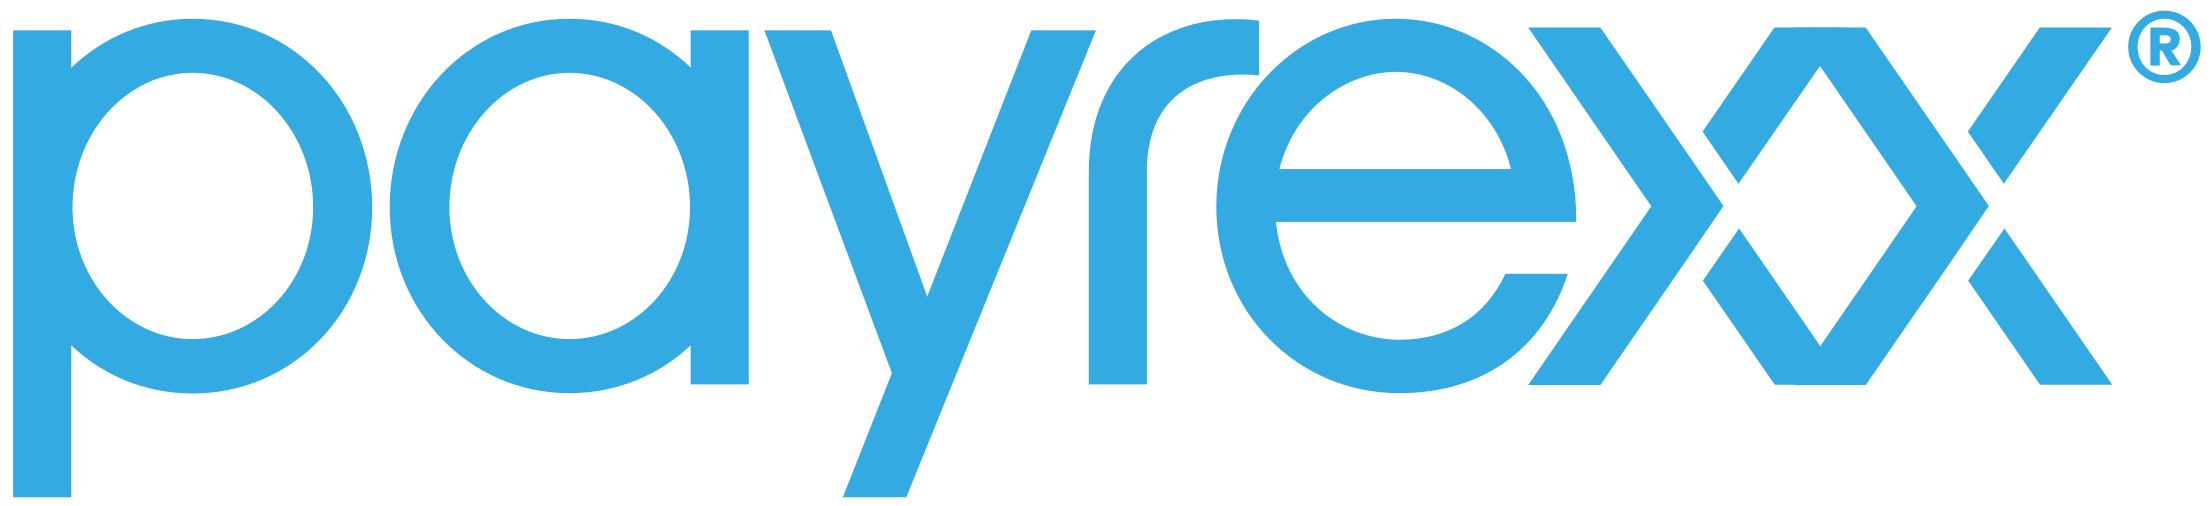 payrexx logo